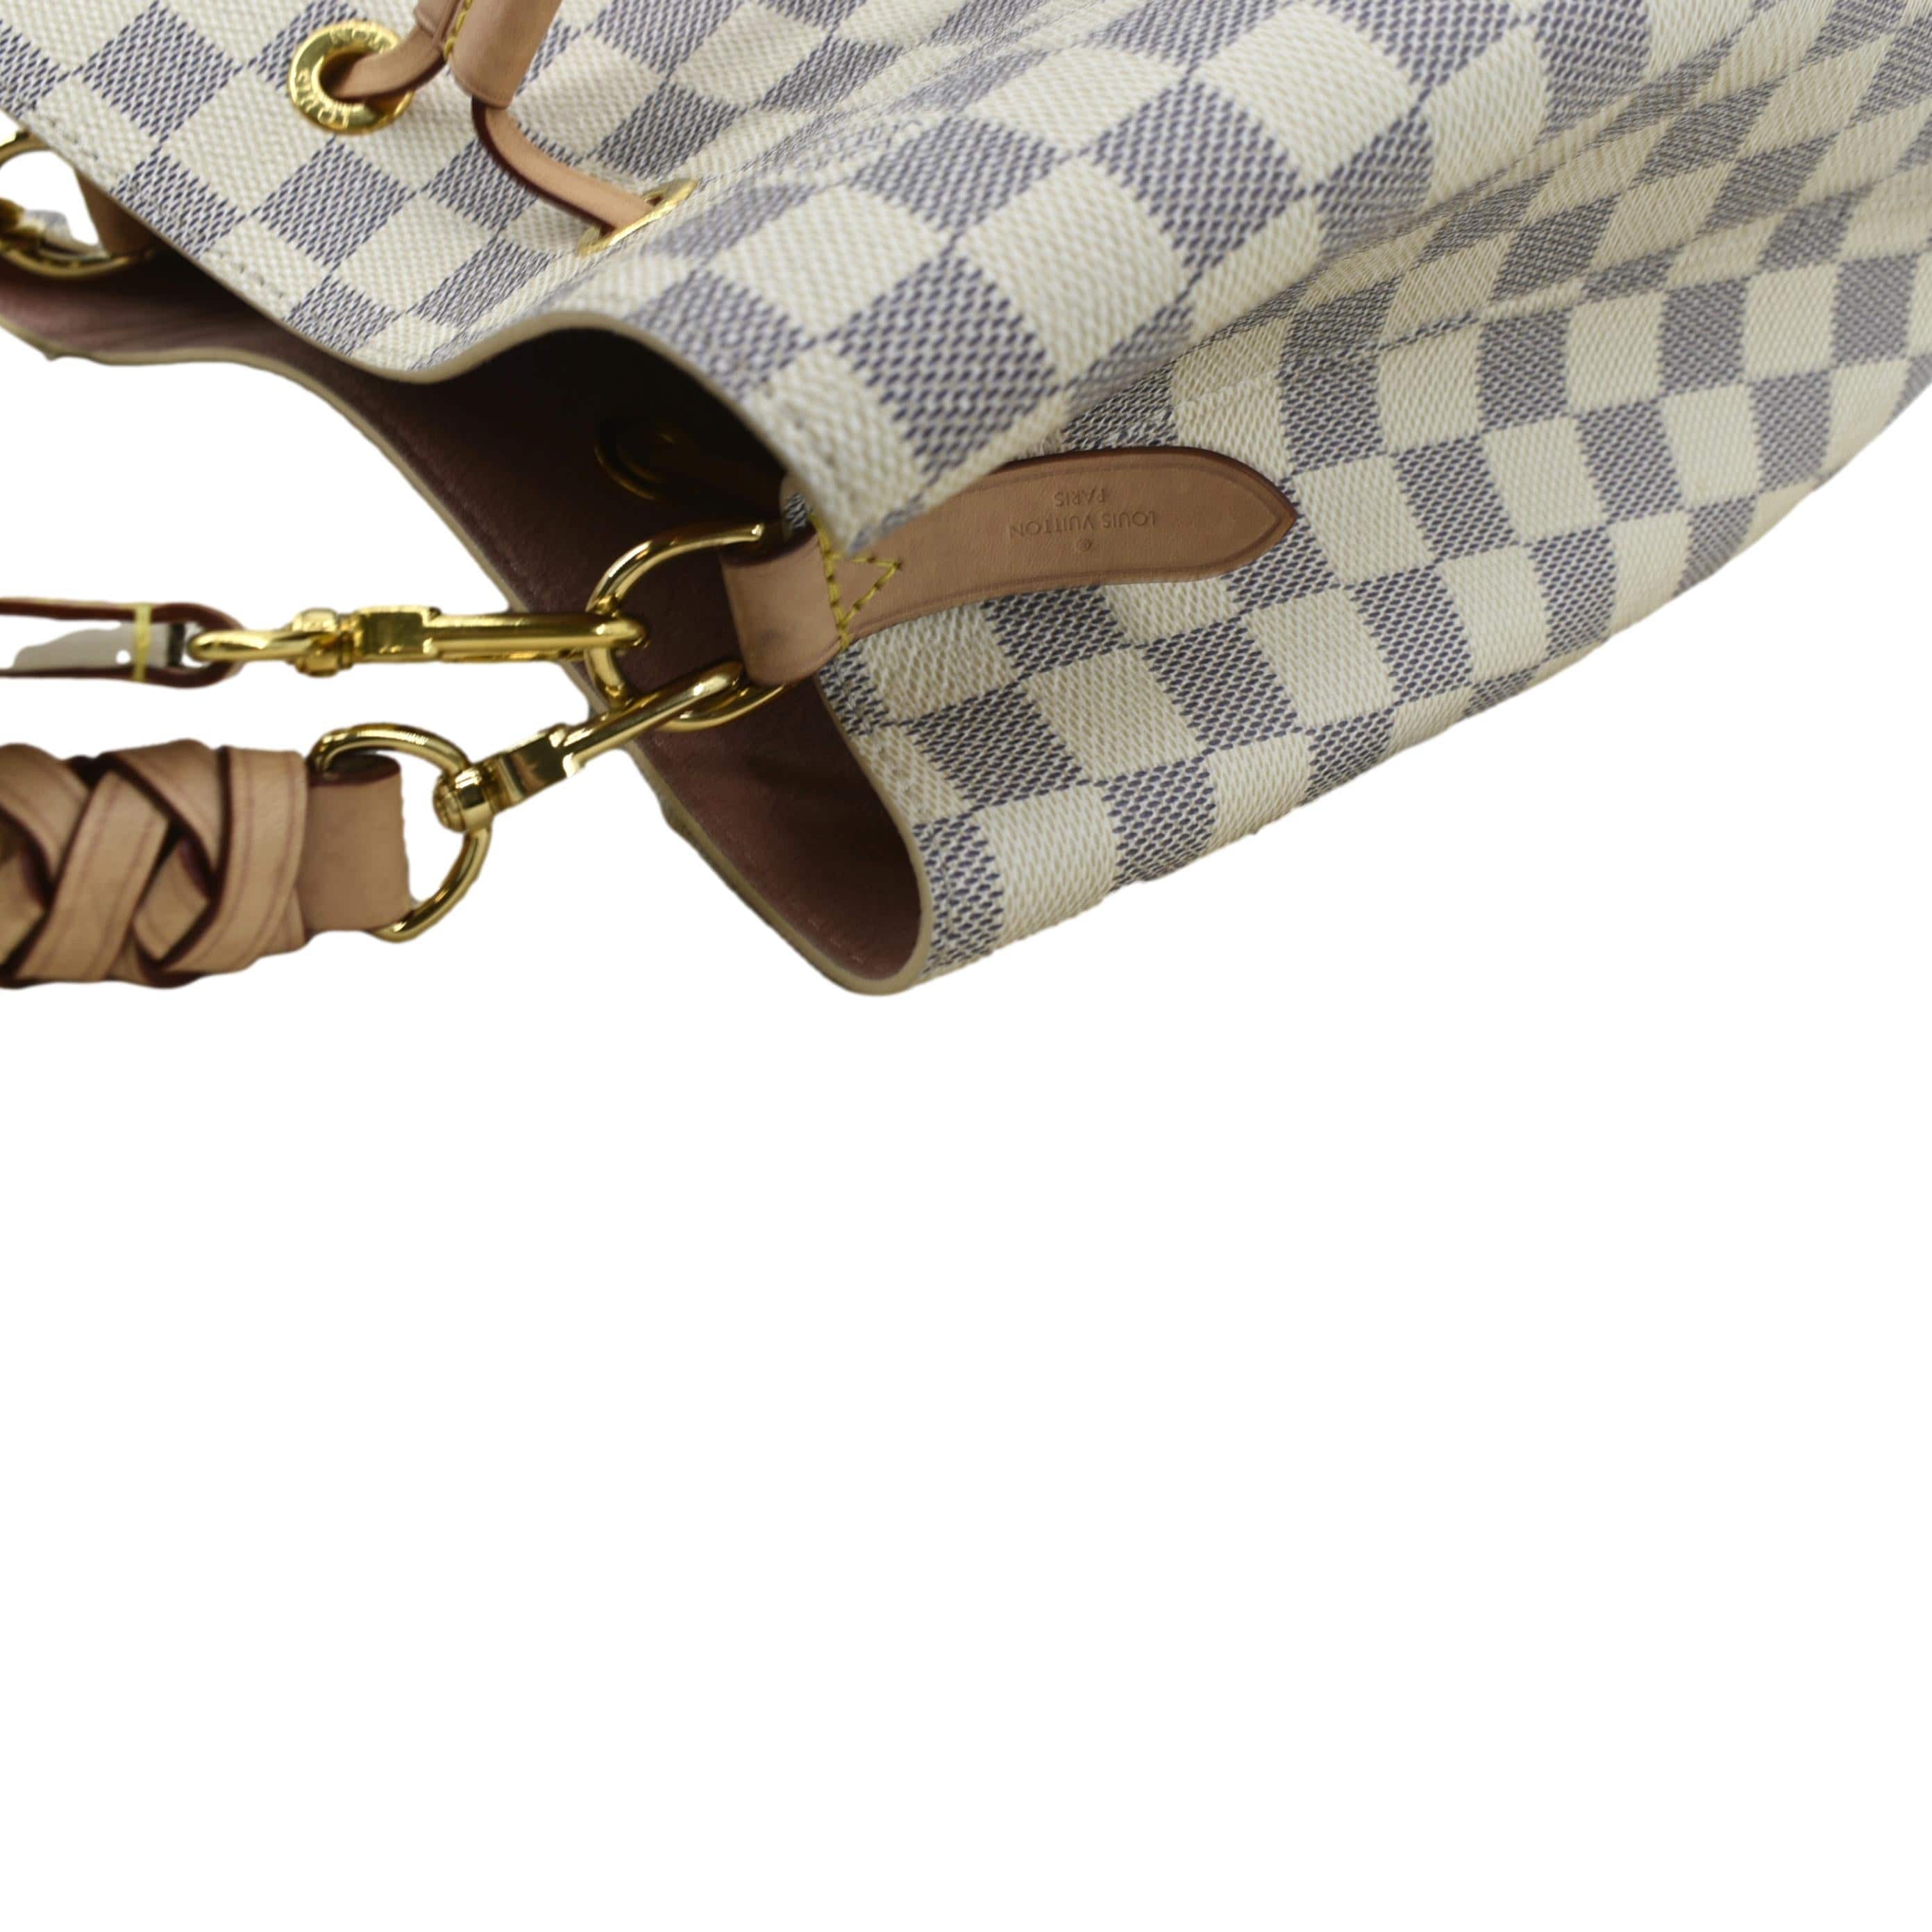 Louis Vuitton Limited Edition Braid Handle Alma BB in Damier Azur - SOLD